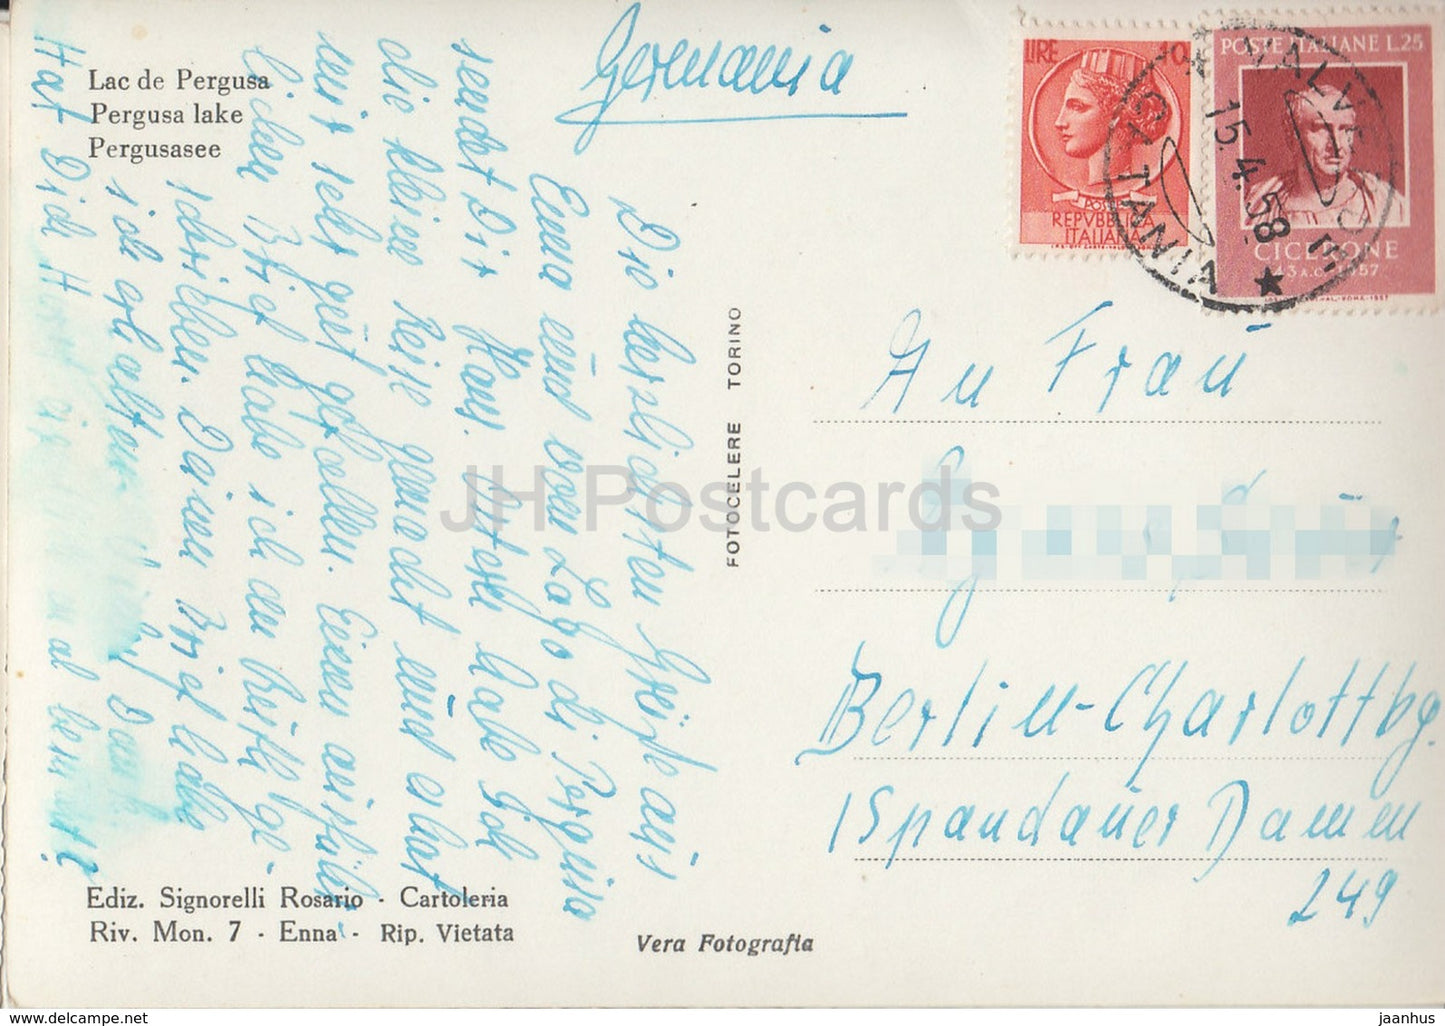 Enna - Lago Pergusa - lake - 1519 - Italy - old postcard - 1958 - used